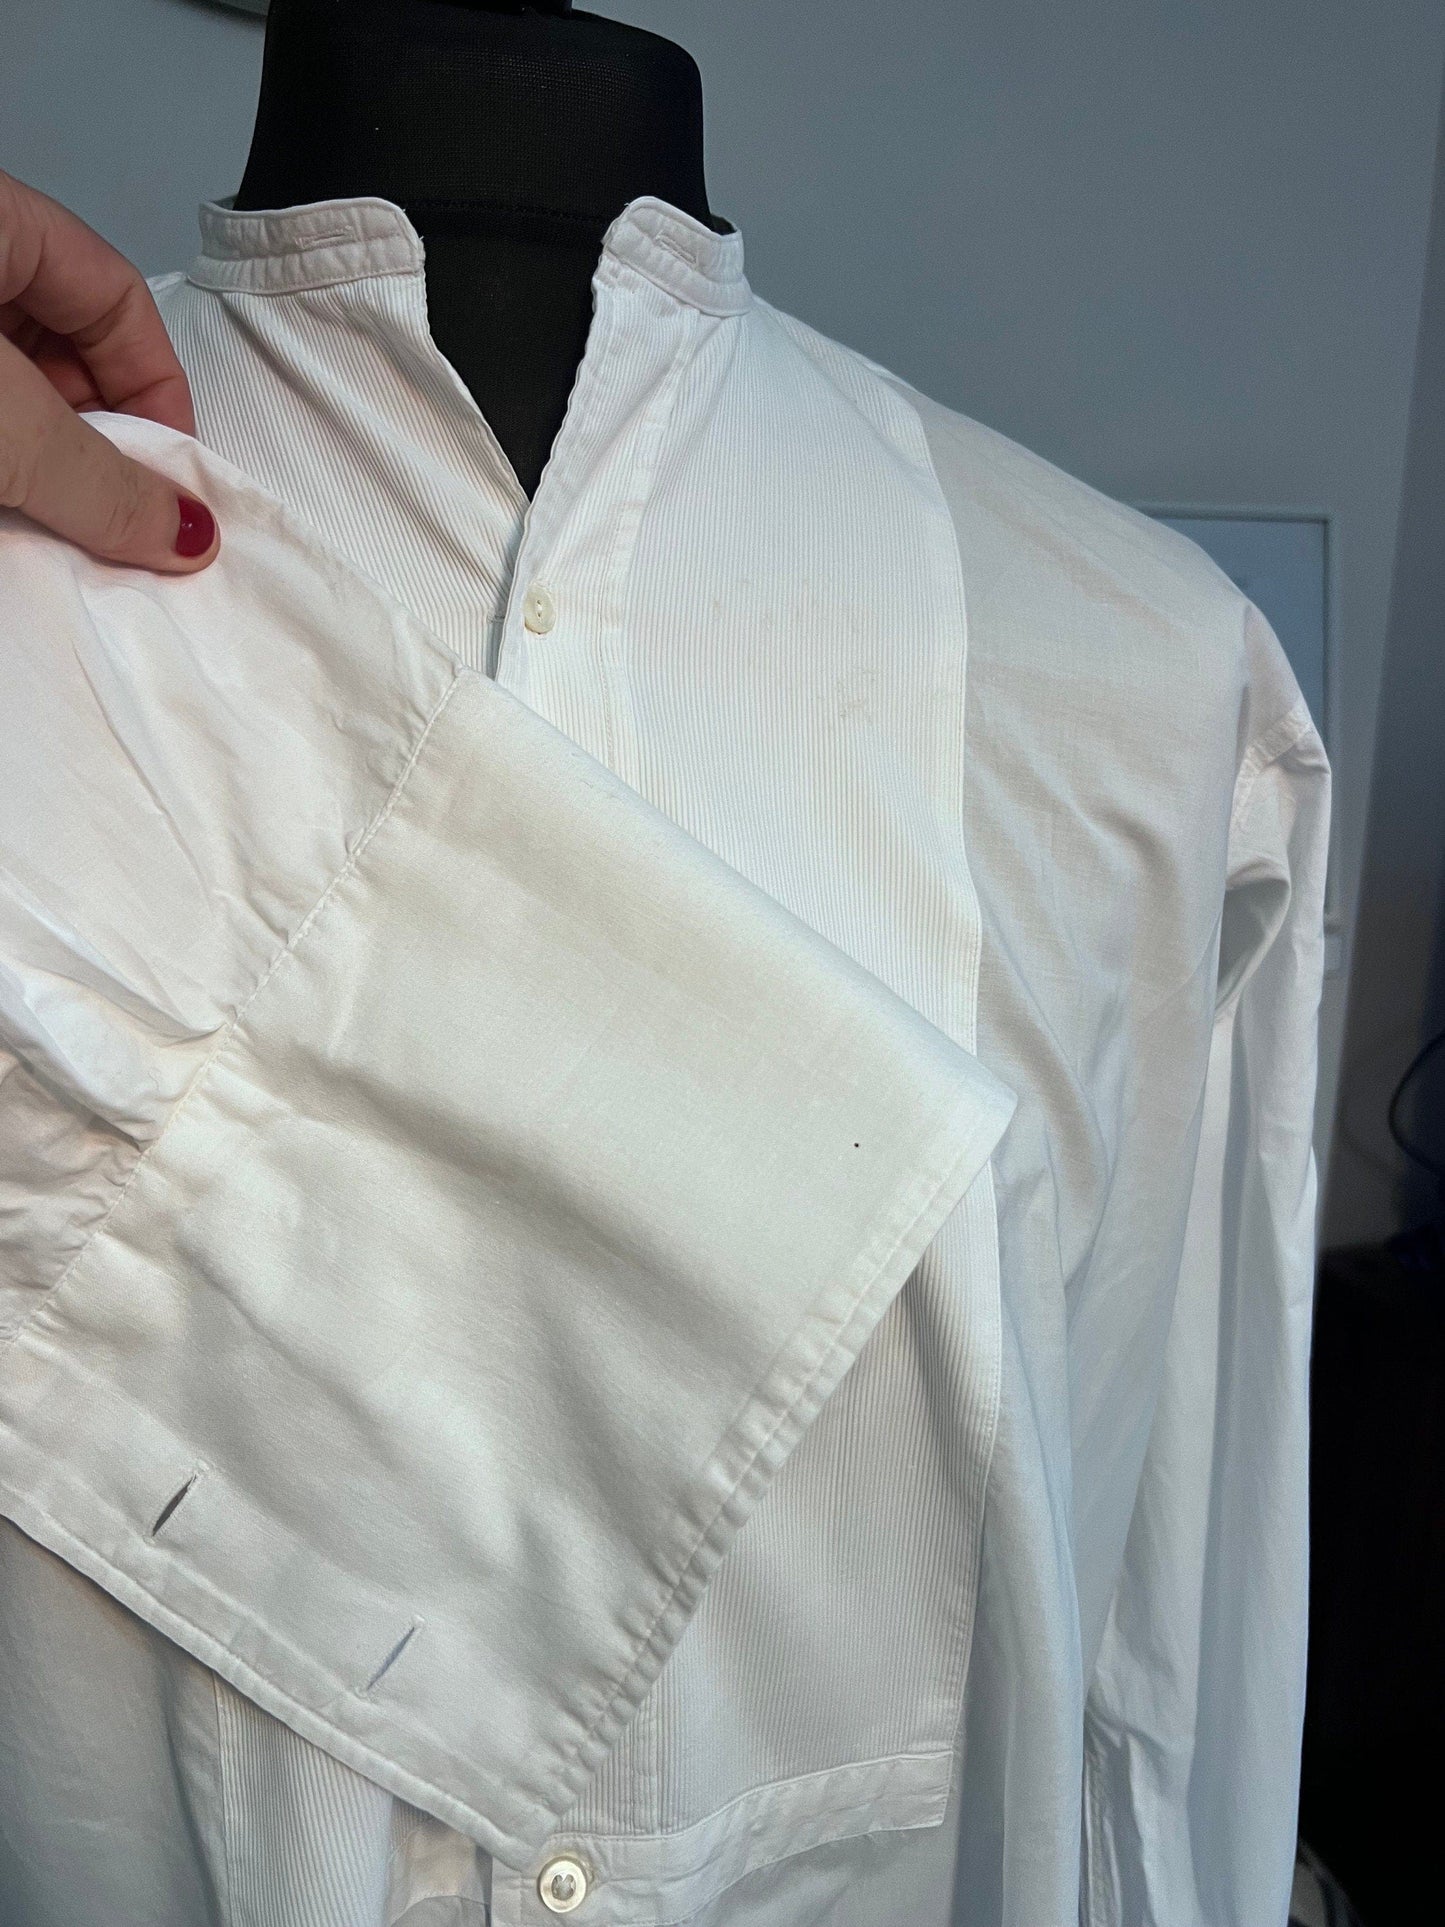 Vintage 1960s Dress Shirt Austin Reed, Bespoke White Shirt, Pleated,Tuxedo Shirt, Bib Front, vintage dress shirt, vintage shirt, men’s shirt